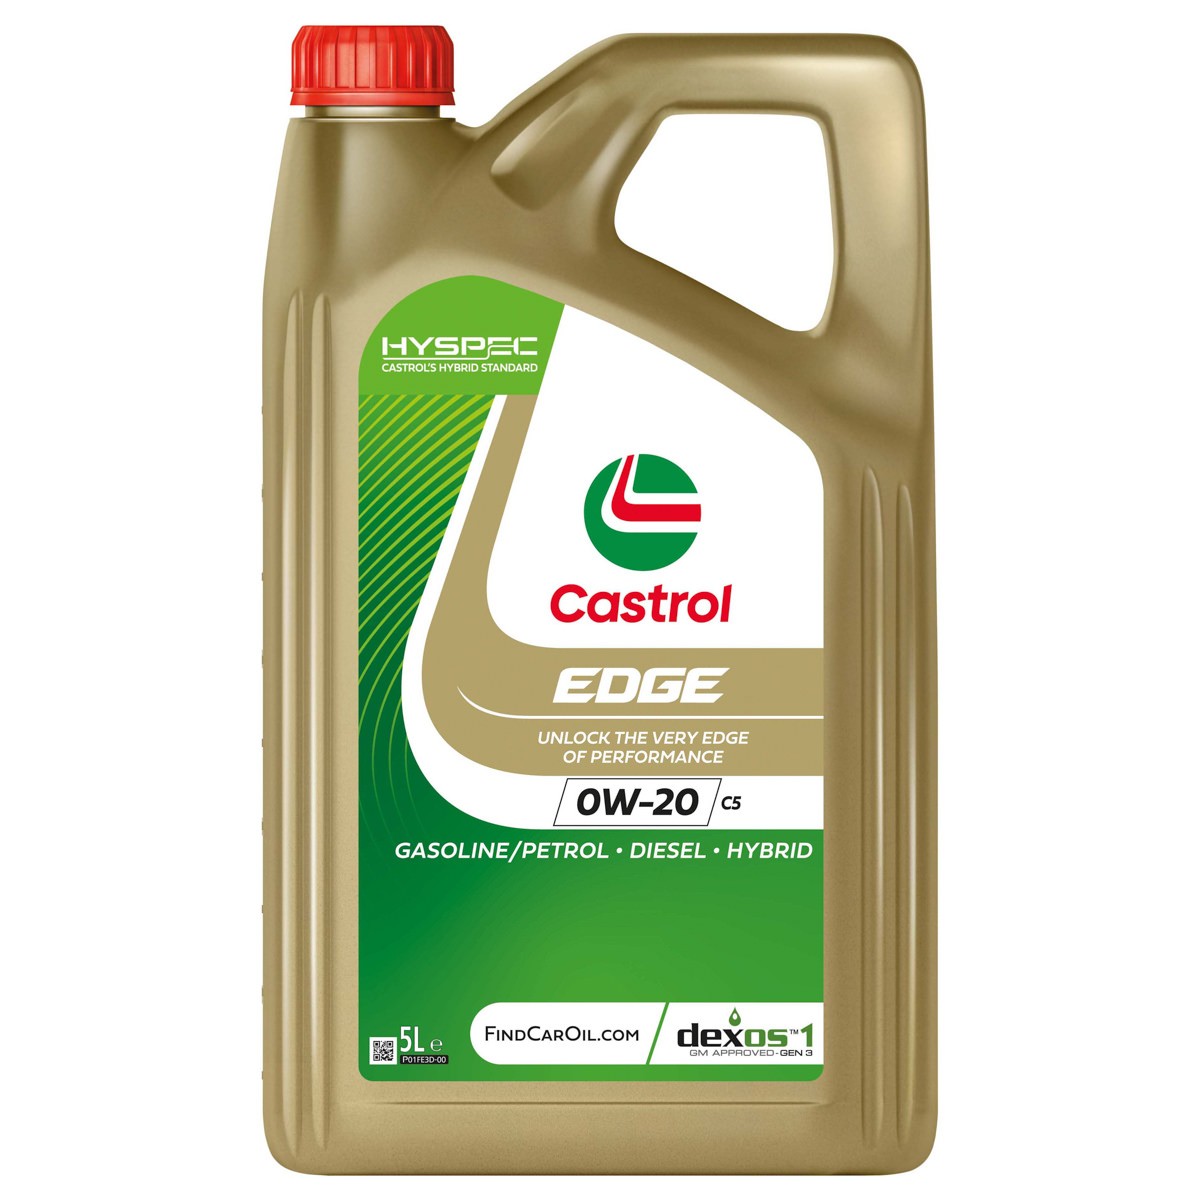 CASTROL EDGE, C5 0W-20, 5l, Synthetic Oil Motor oil 15F6EB buy